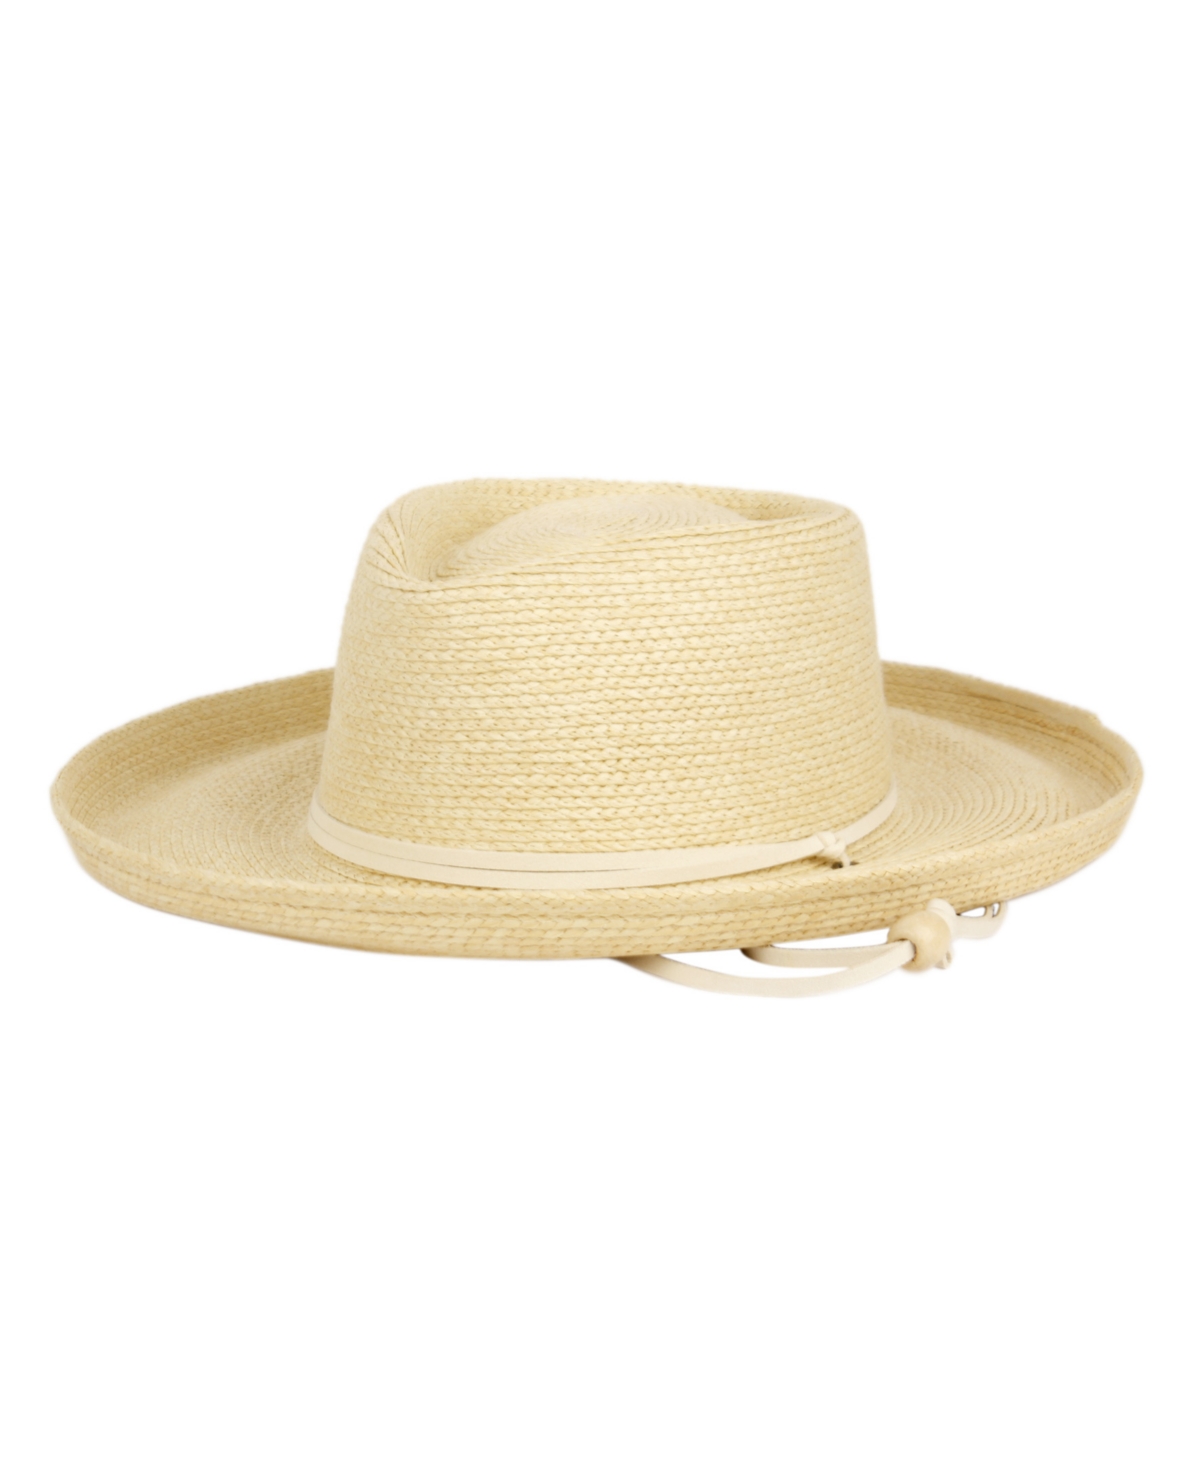 Straw Ferora Sun Hat with Chin Cord - Natural